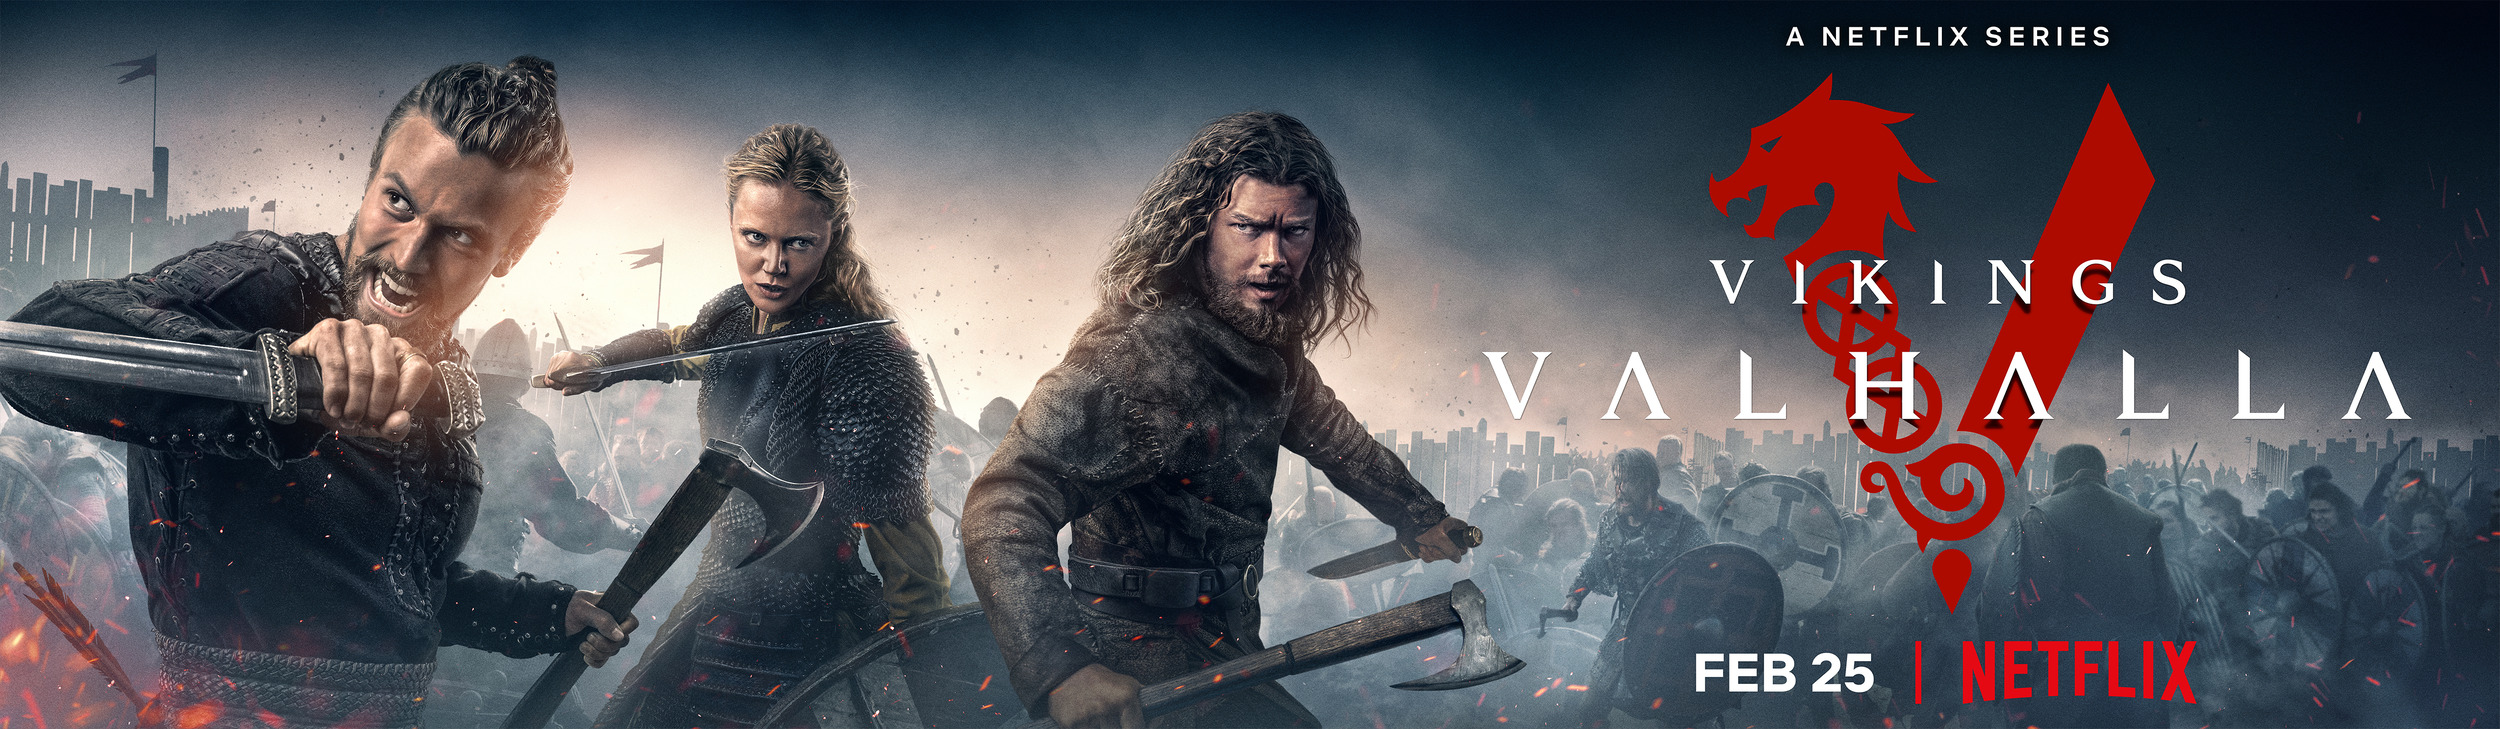 Mega Sized TV Poster Image for Vikings: Valhalla (#7 of 18)